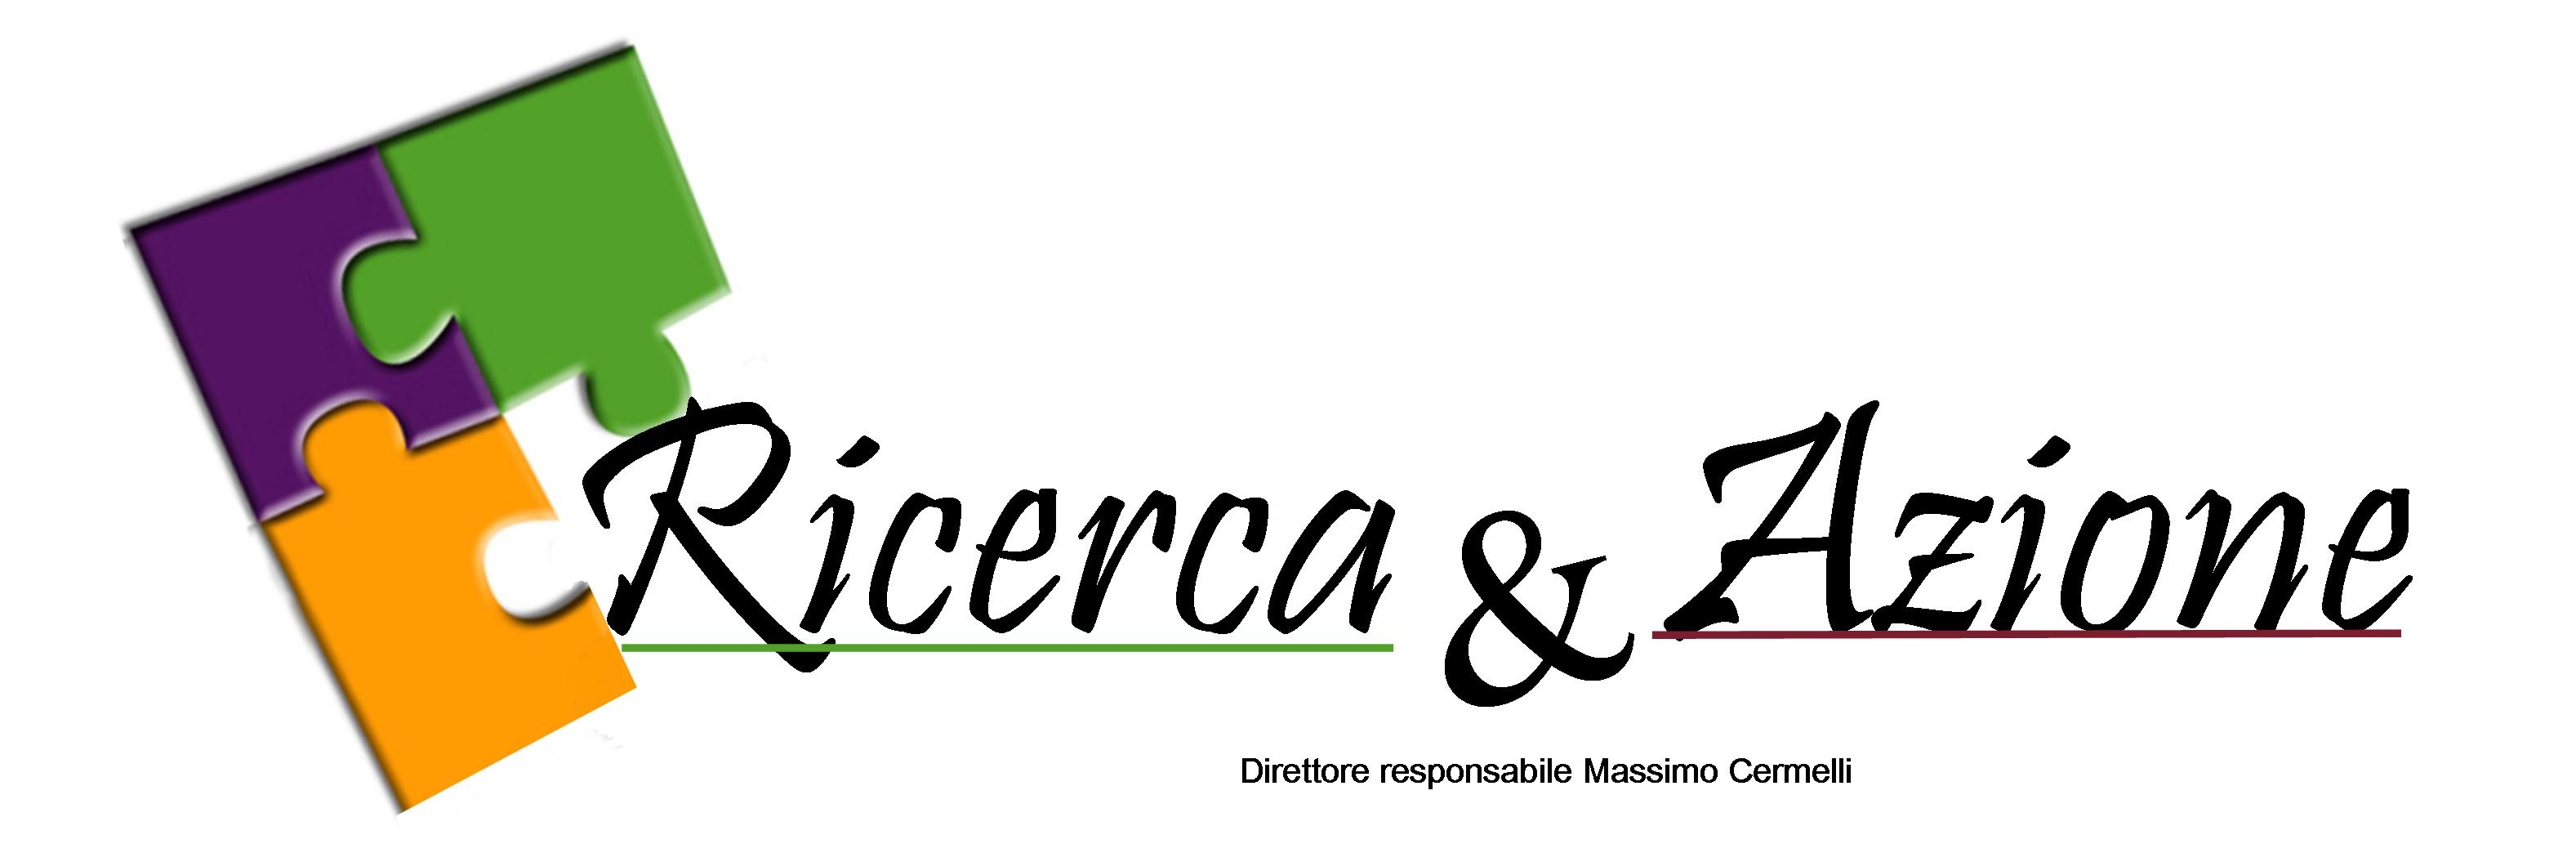 http://www.ricercaeazione.it/Logo_Ricerca_&_Azione.jpg